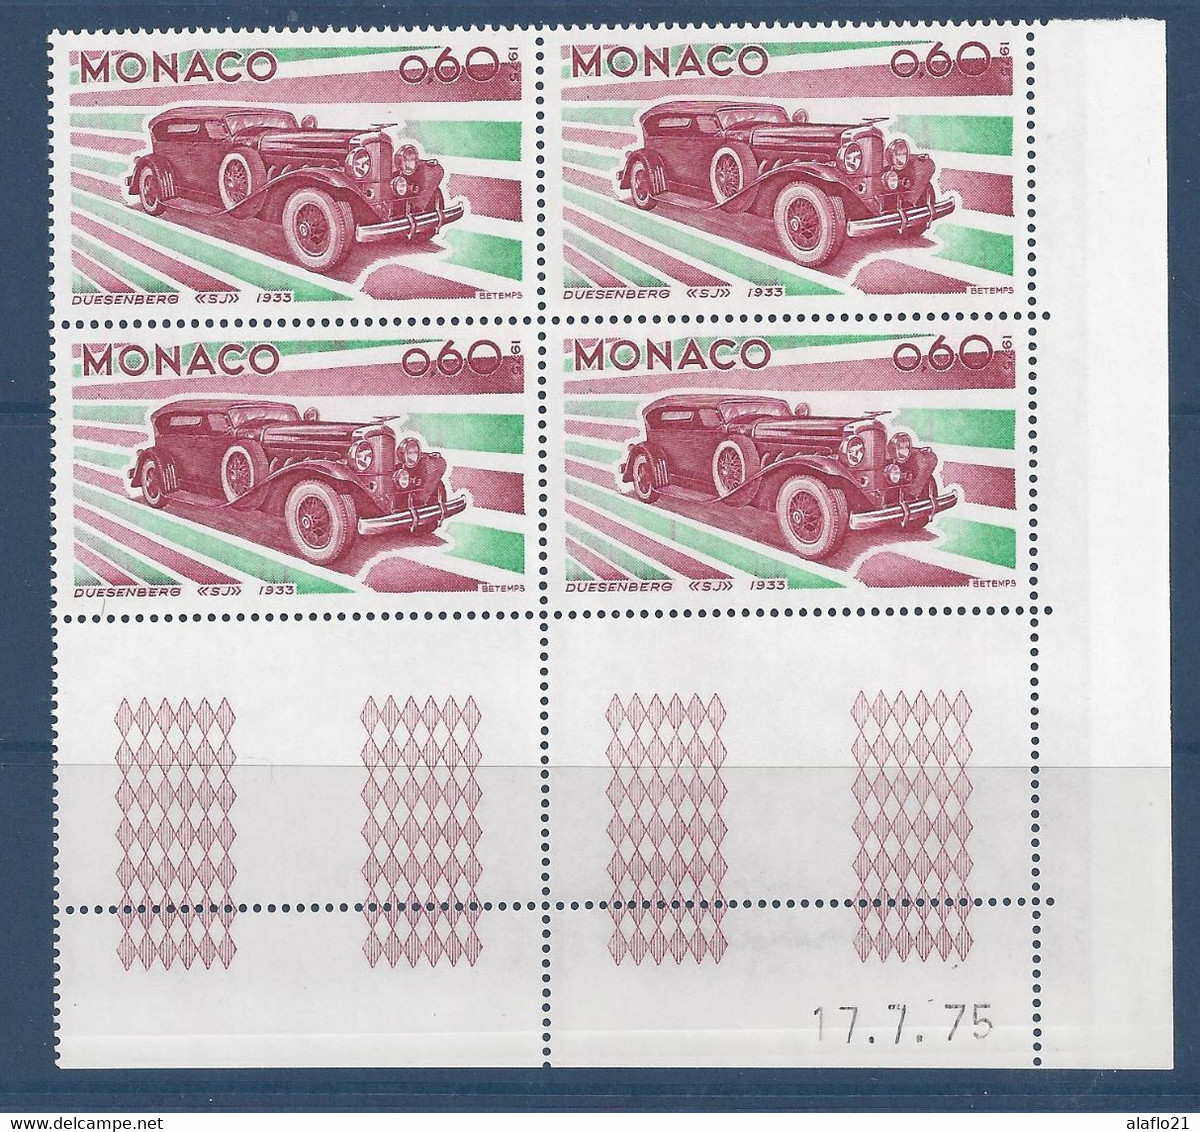 MONACO - N° 1023 - DUESENBERG 1933 - Bloc De 4 COIN DATE - NEUF SANS CHARNIERE - 17/7/75 - Neufs